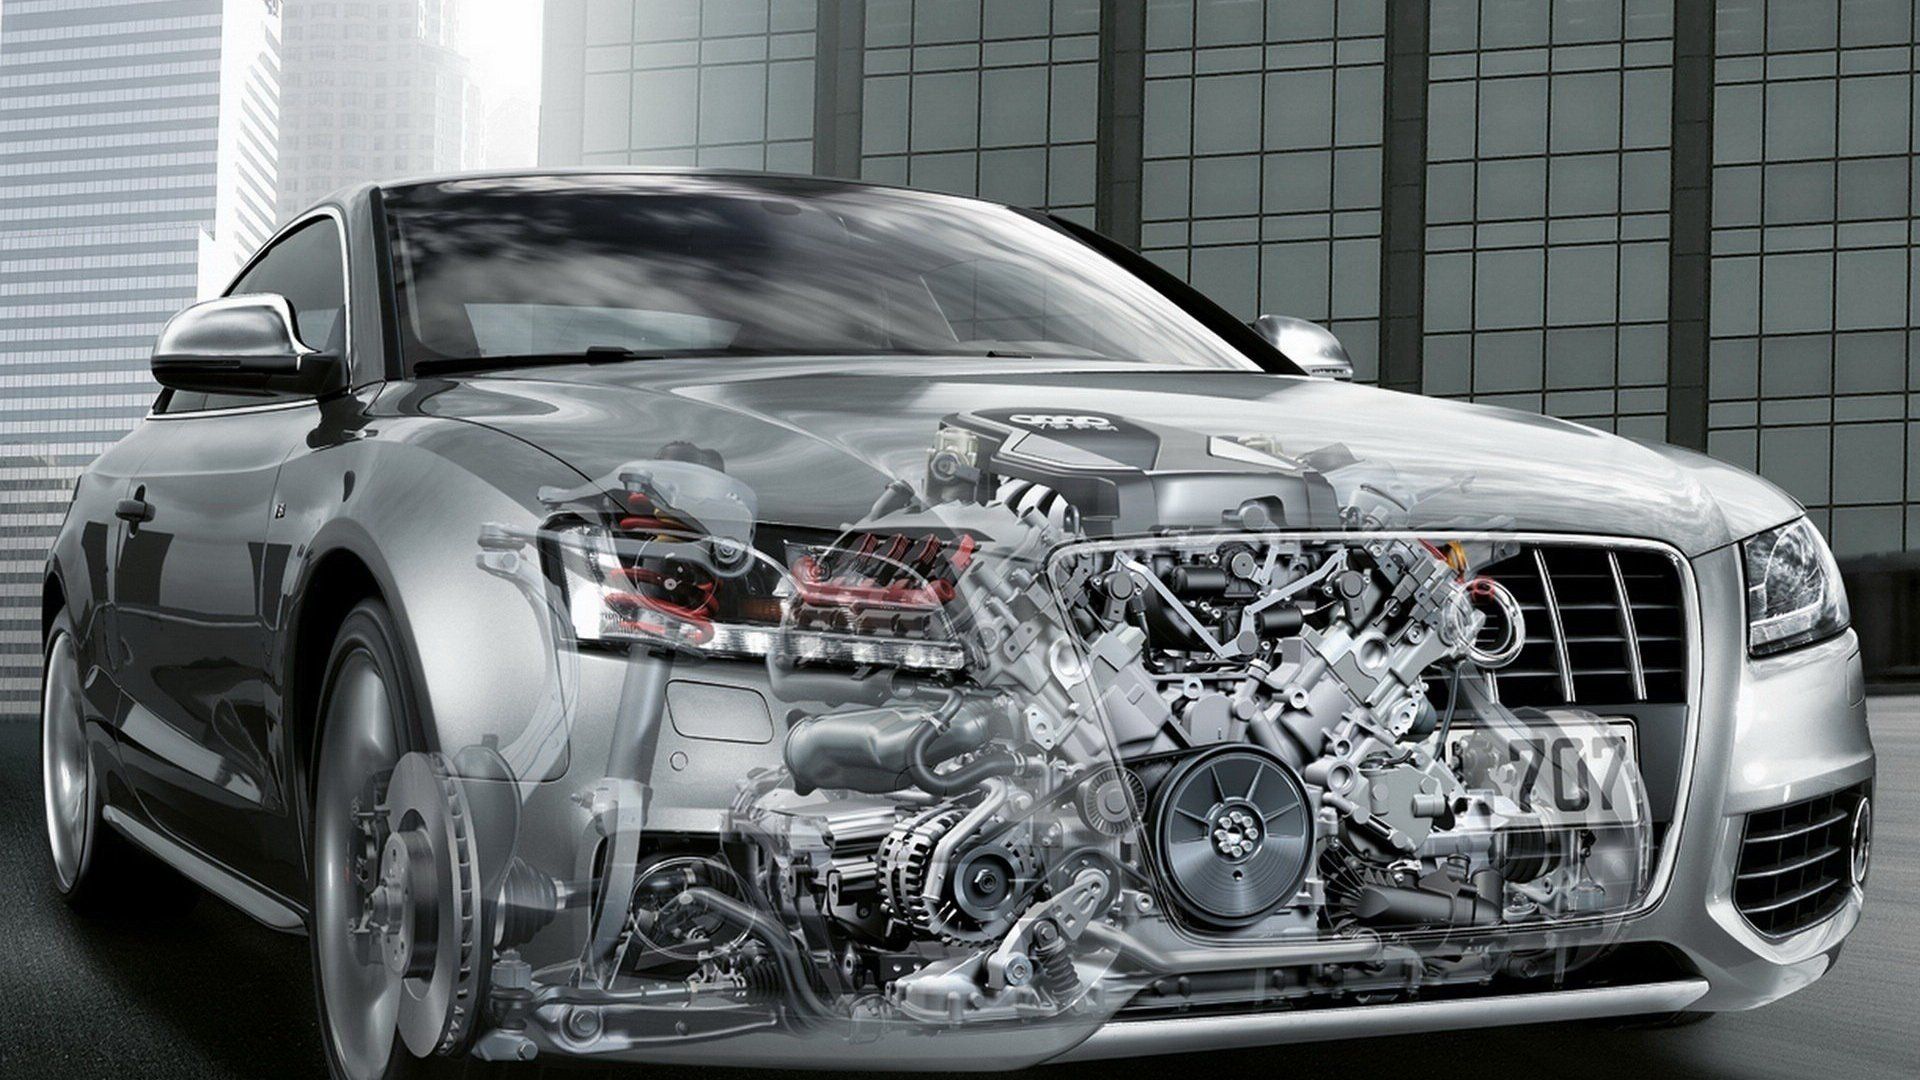 HD Engine Wallpaper Background Audi